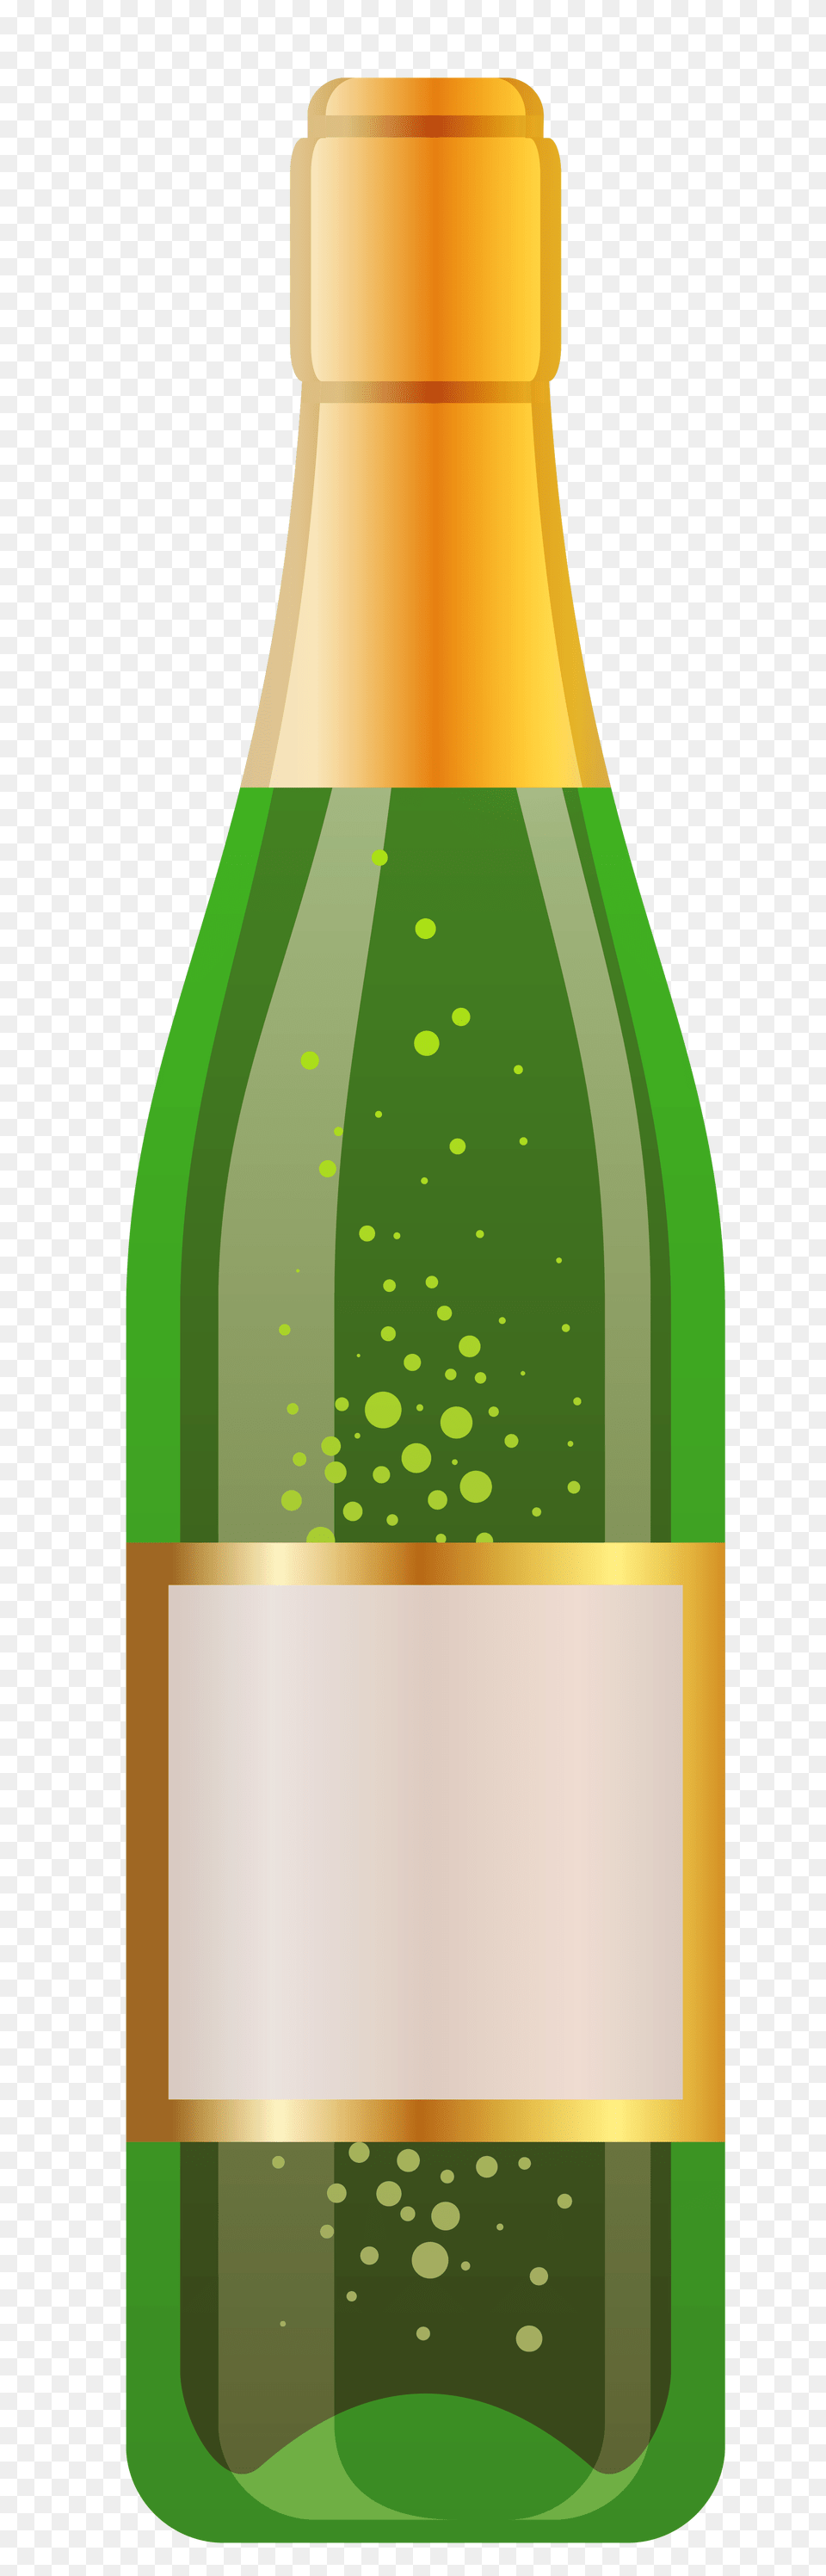 Bottle Of White Wine Vector, Alcohol, Liquor, Wine Bottle, Beverage Free Transparent Png